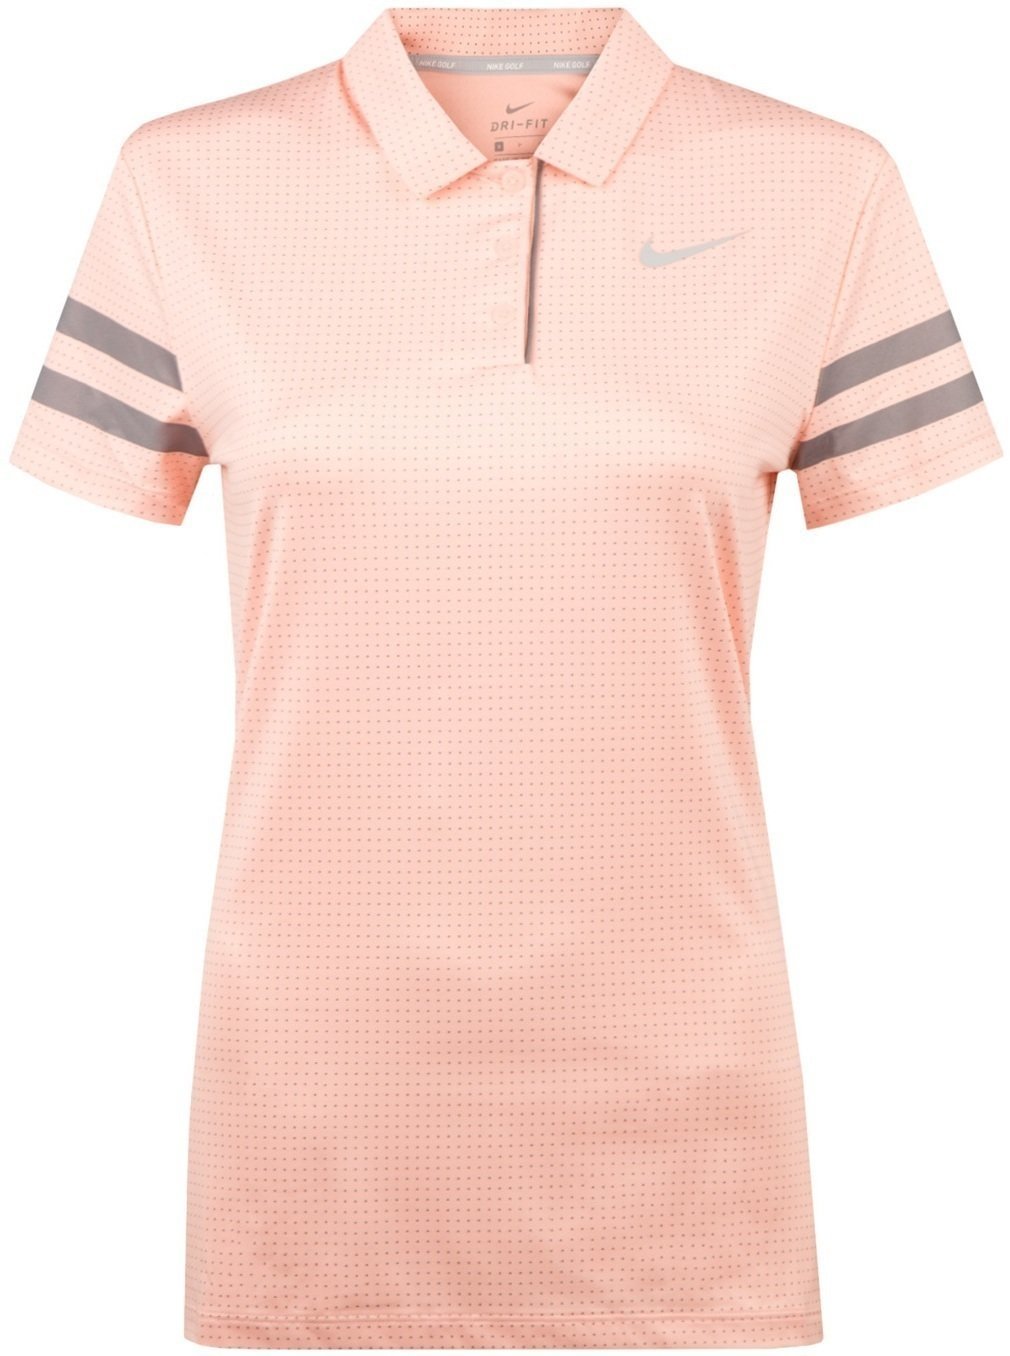 Poloshirt Nike Dri-Fit Printed Womens Polo Storm Pink/Anthracite/White XS